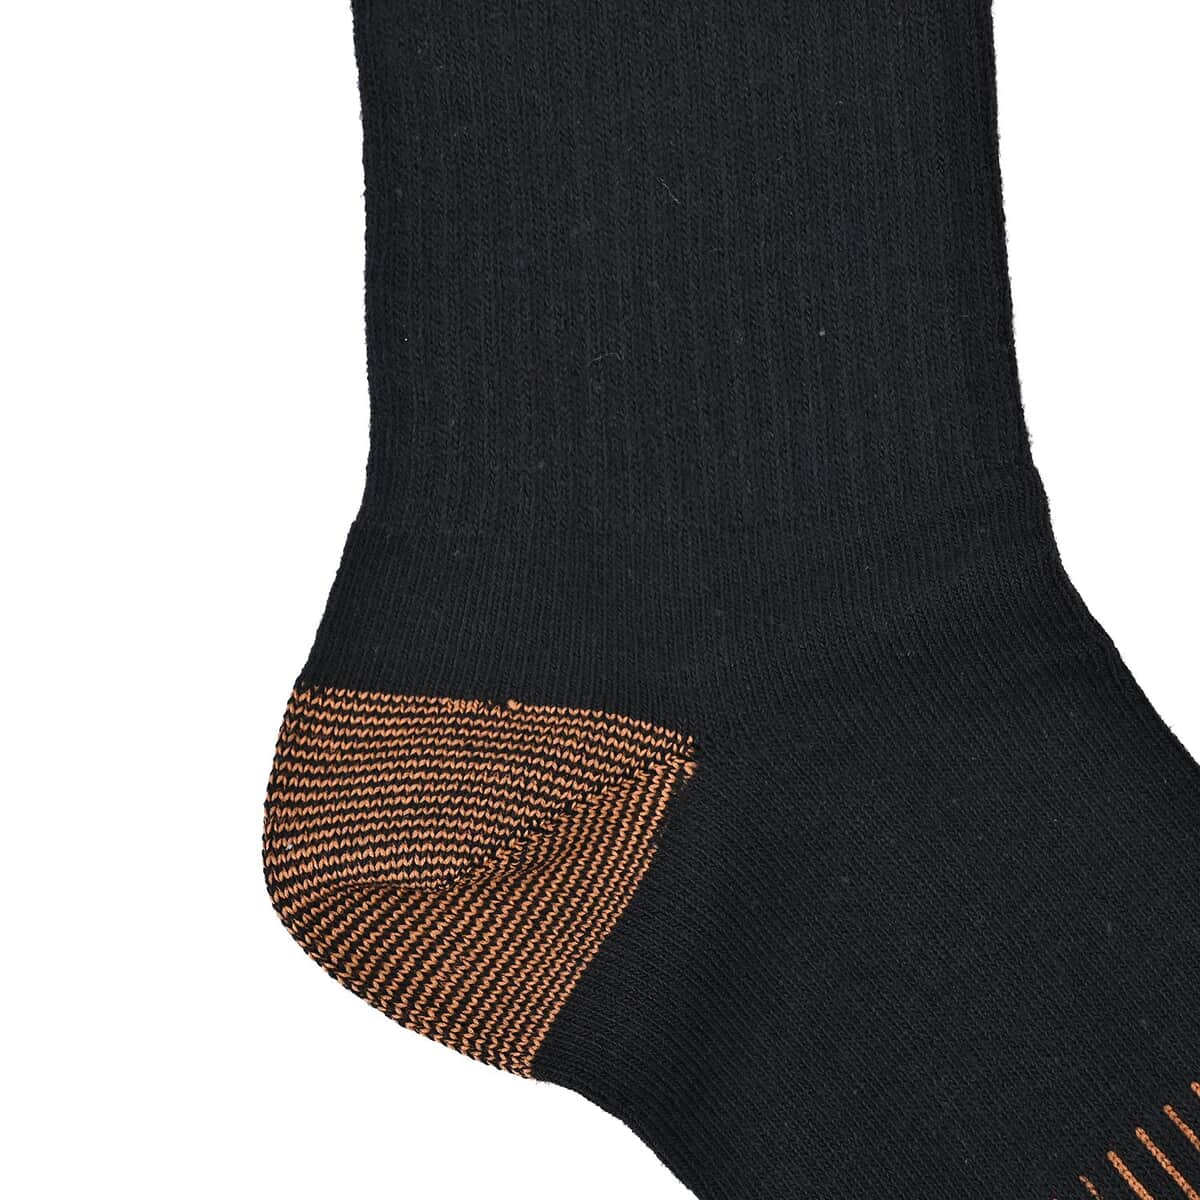 Set of 4 Pairs Knee Length Copper Infused Compression Socks - Black (S/M)  image number 2